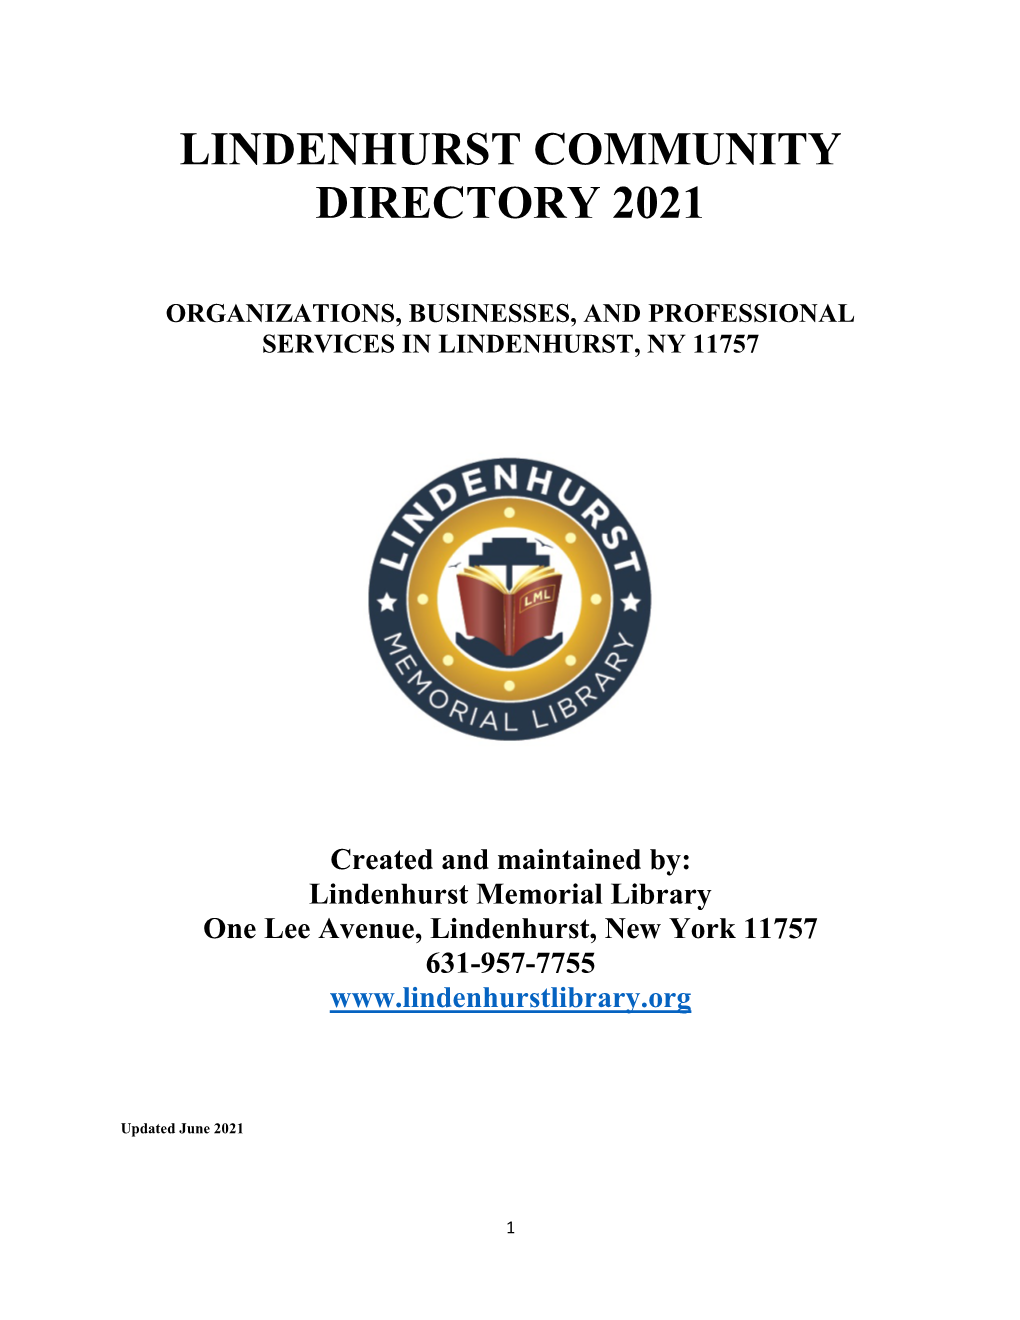 Lindenhurst Community Directory 2021